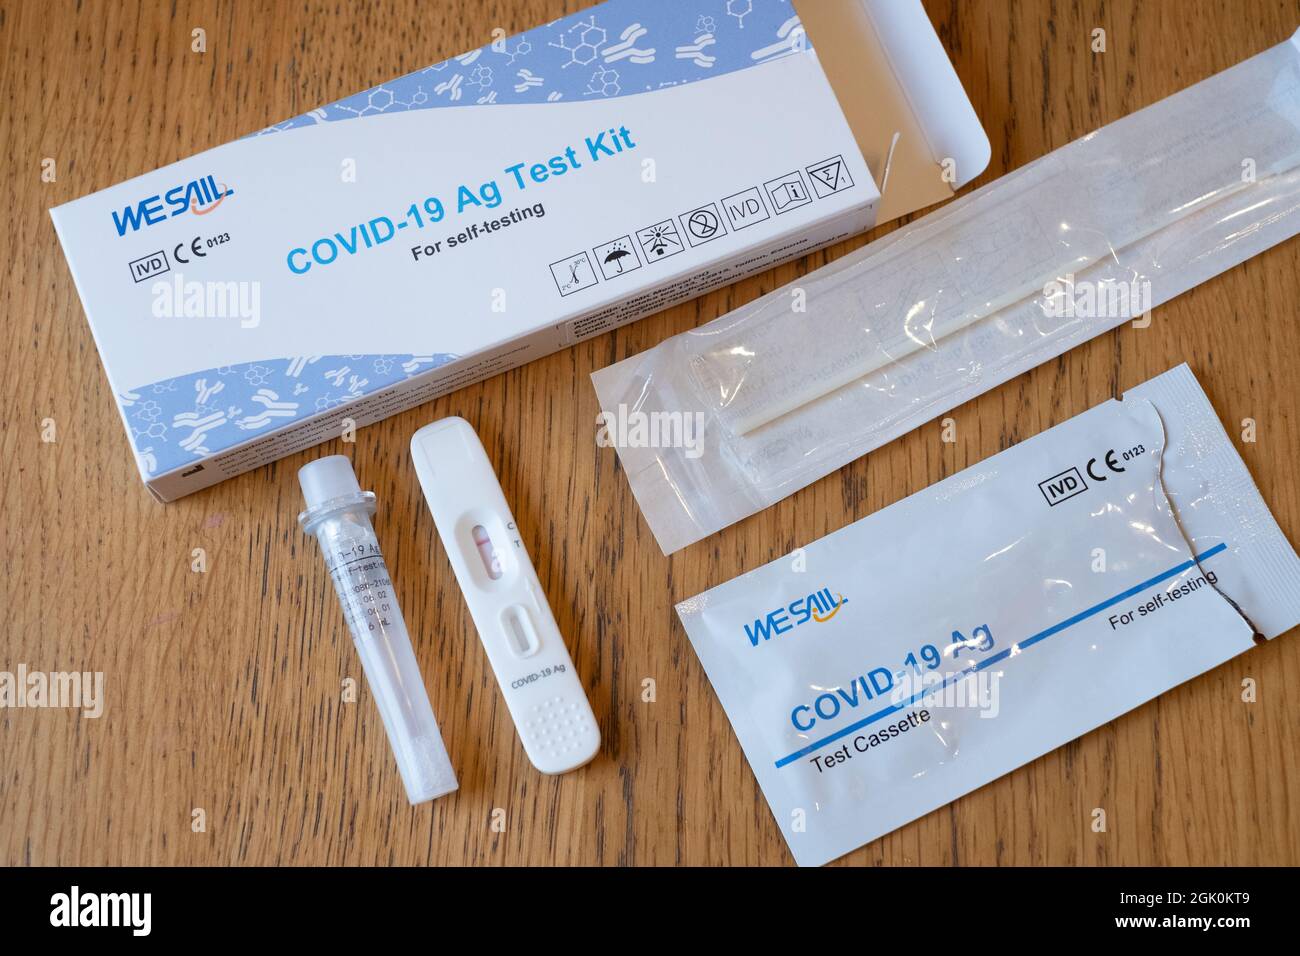 Tallinn, Estonia - September 12, 2021: COVID-19 Ag Test kit for self-testing. Corona virus diagnosis. Open package on wooden home table. Stock Photo